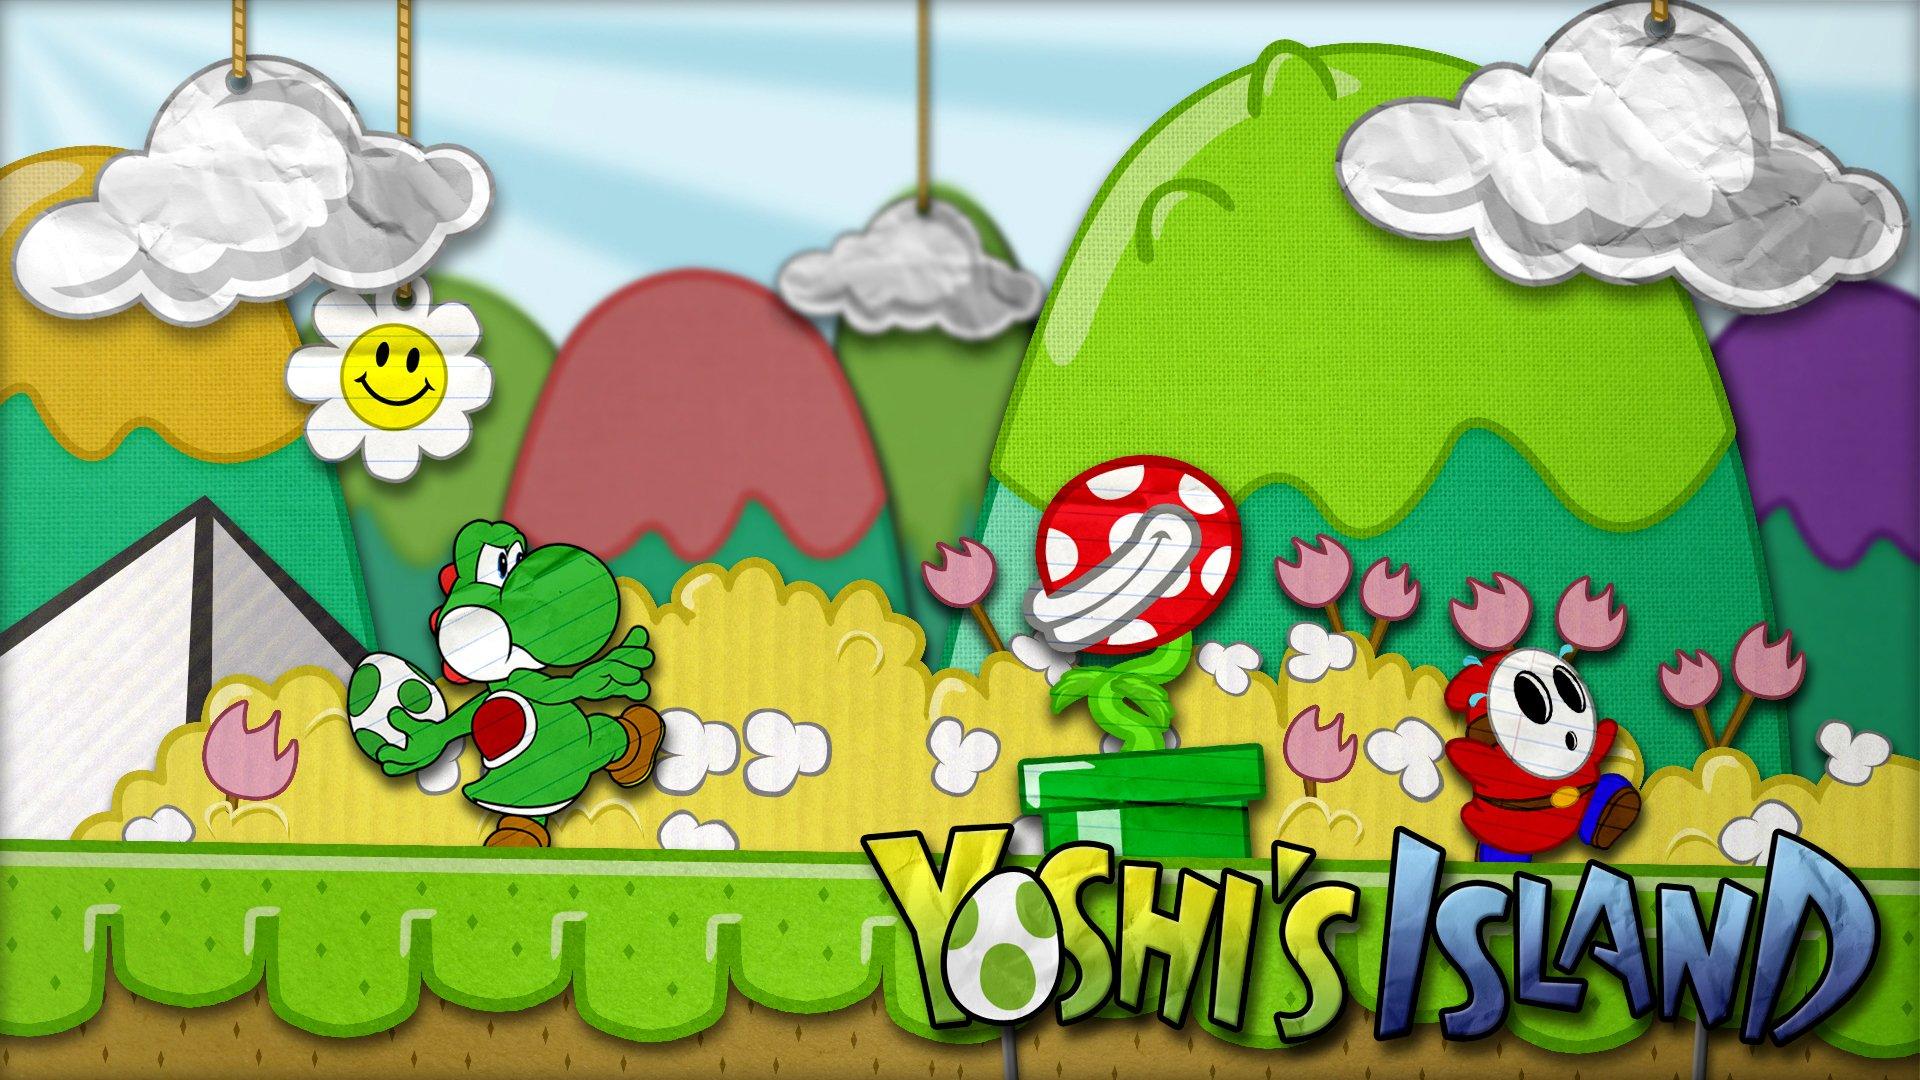 Super Mario World 2: Yoshi's Island HD Wallpaper. Background Image